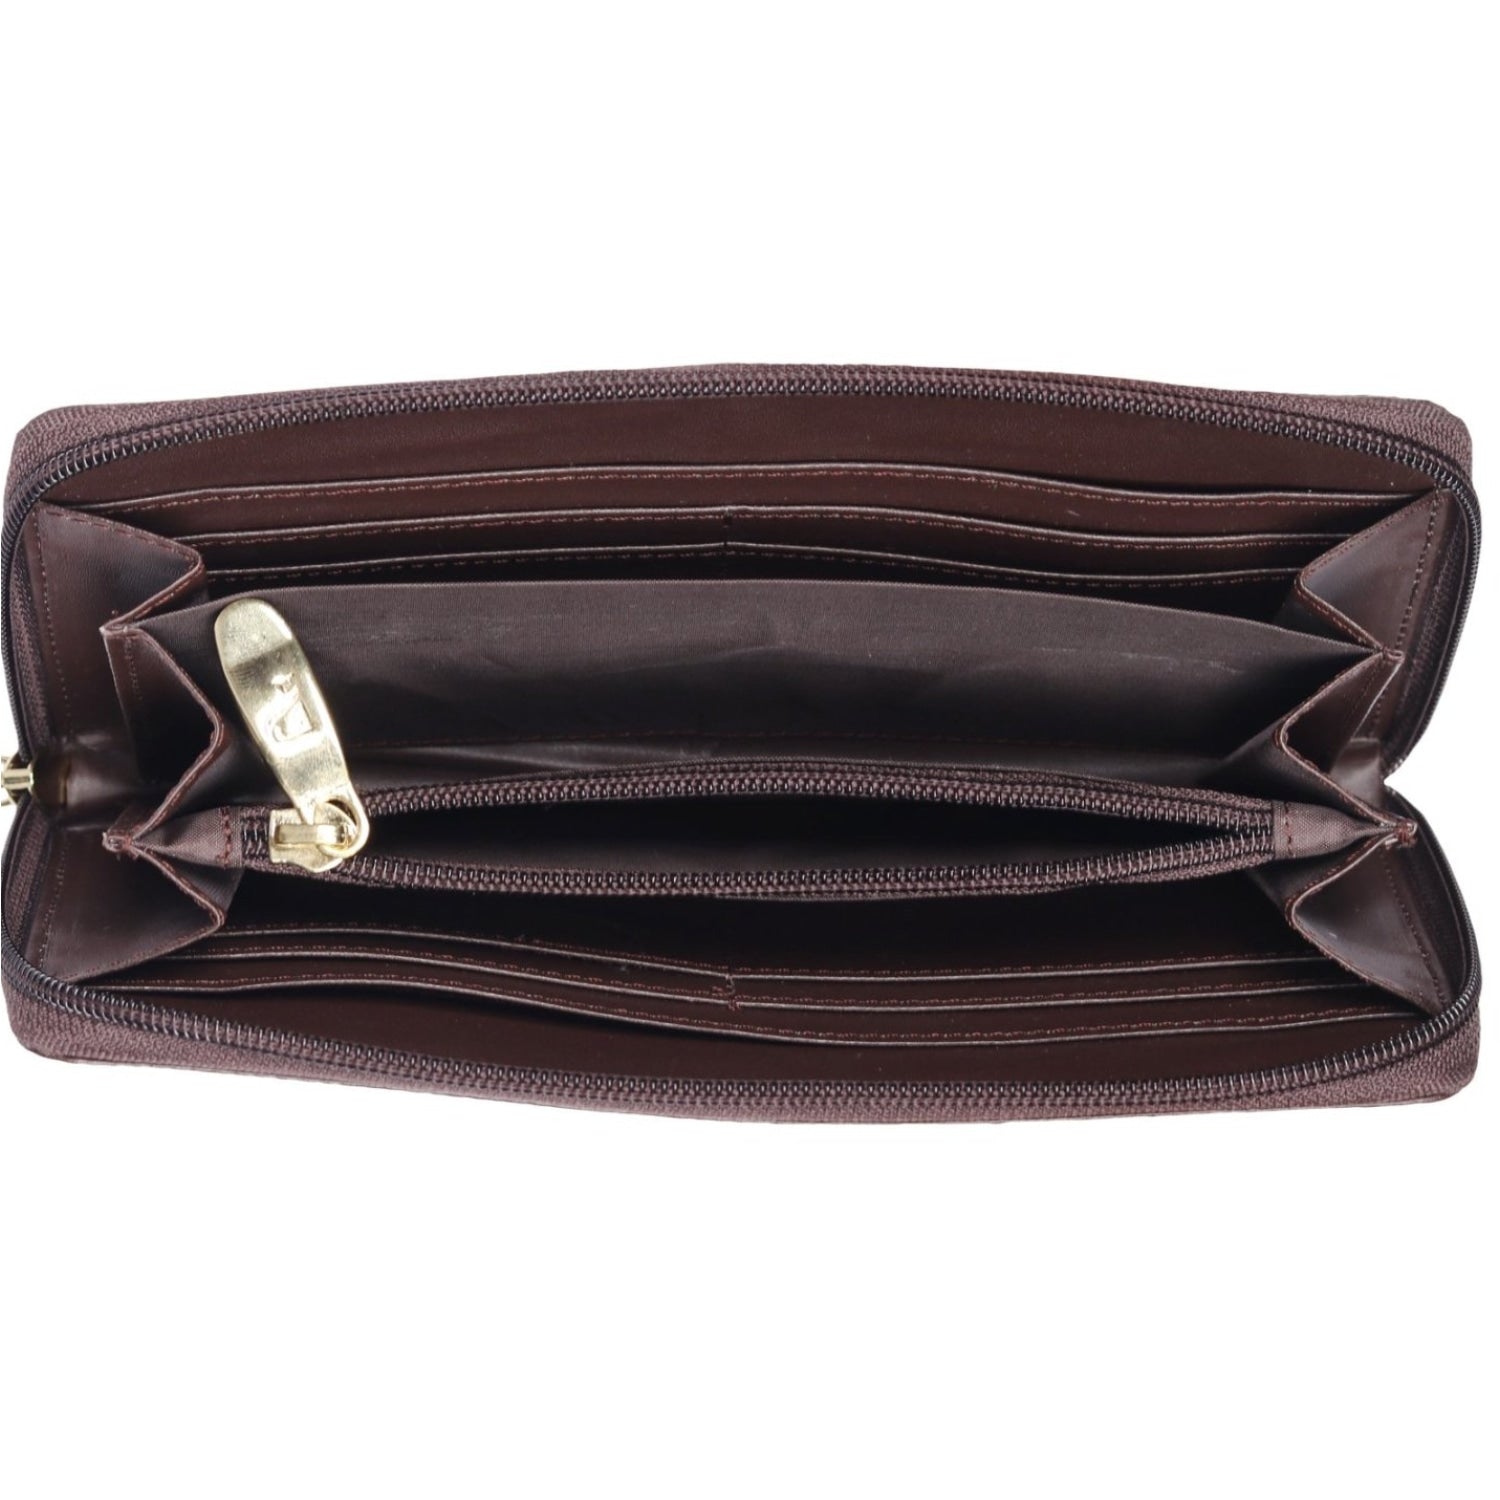 Pochette Multi-colour Long Wallet - wallets